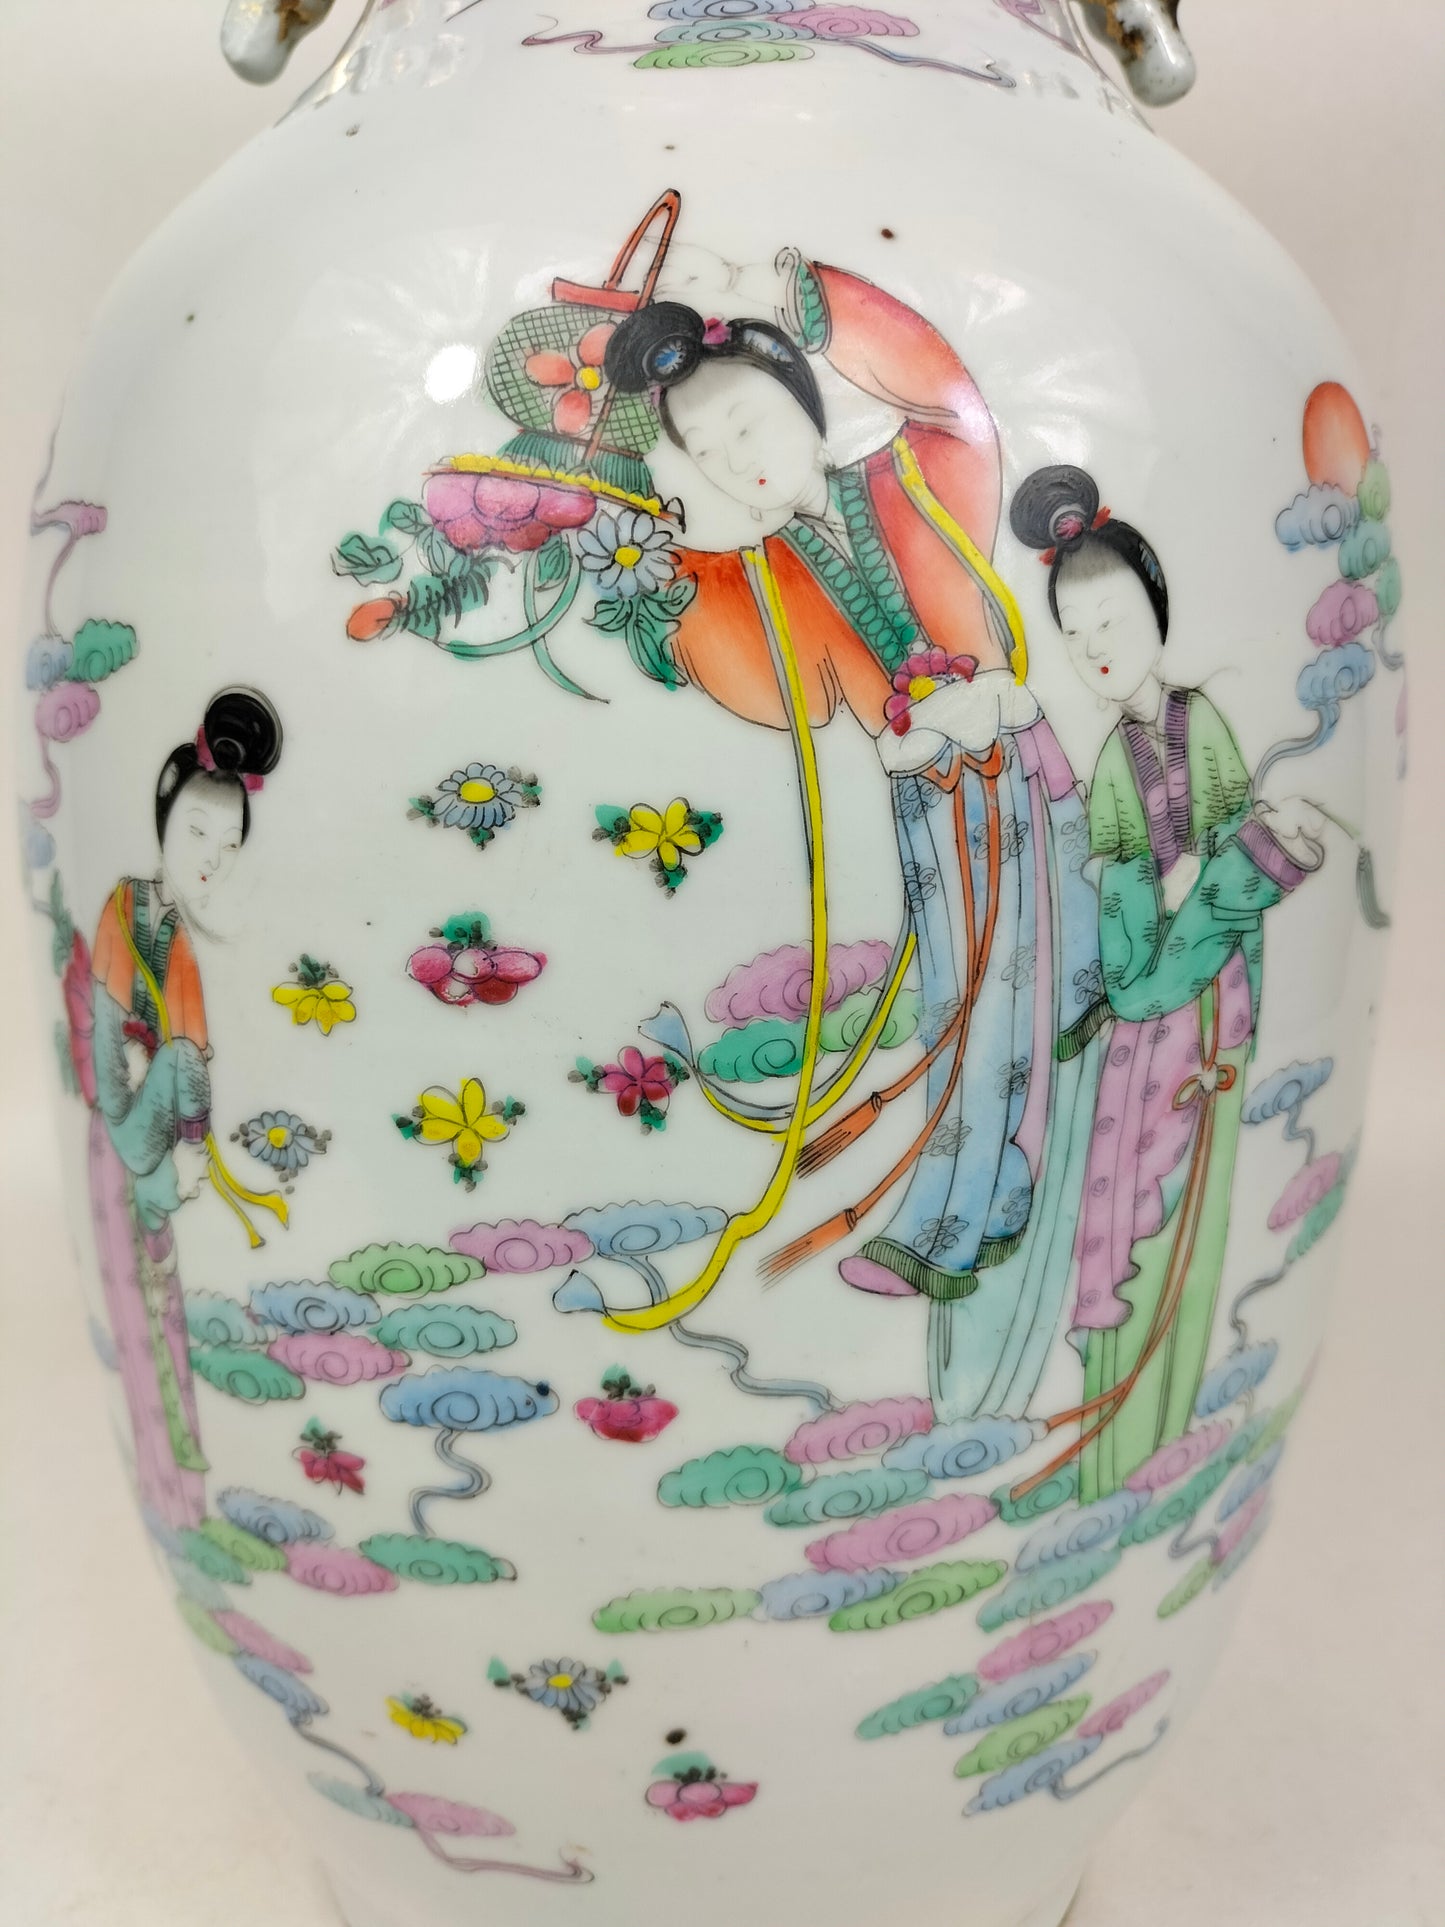 Antique Chinese vase decorated with figures // Republic Period (1912-1949)